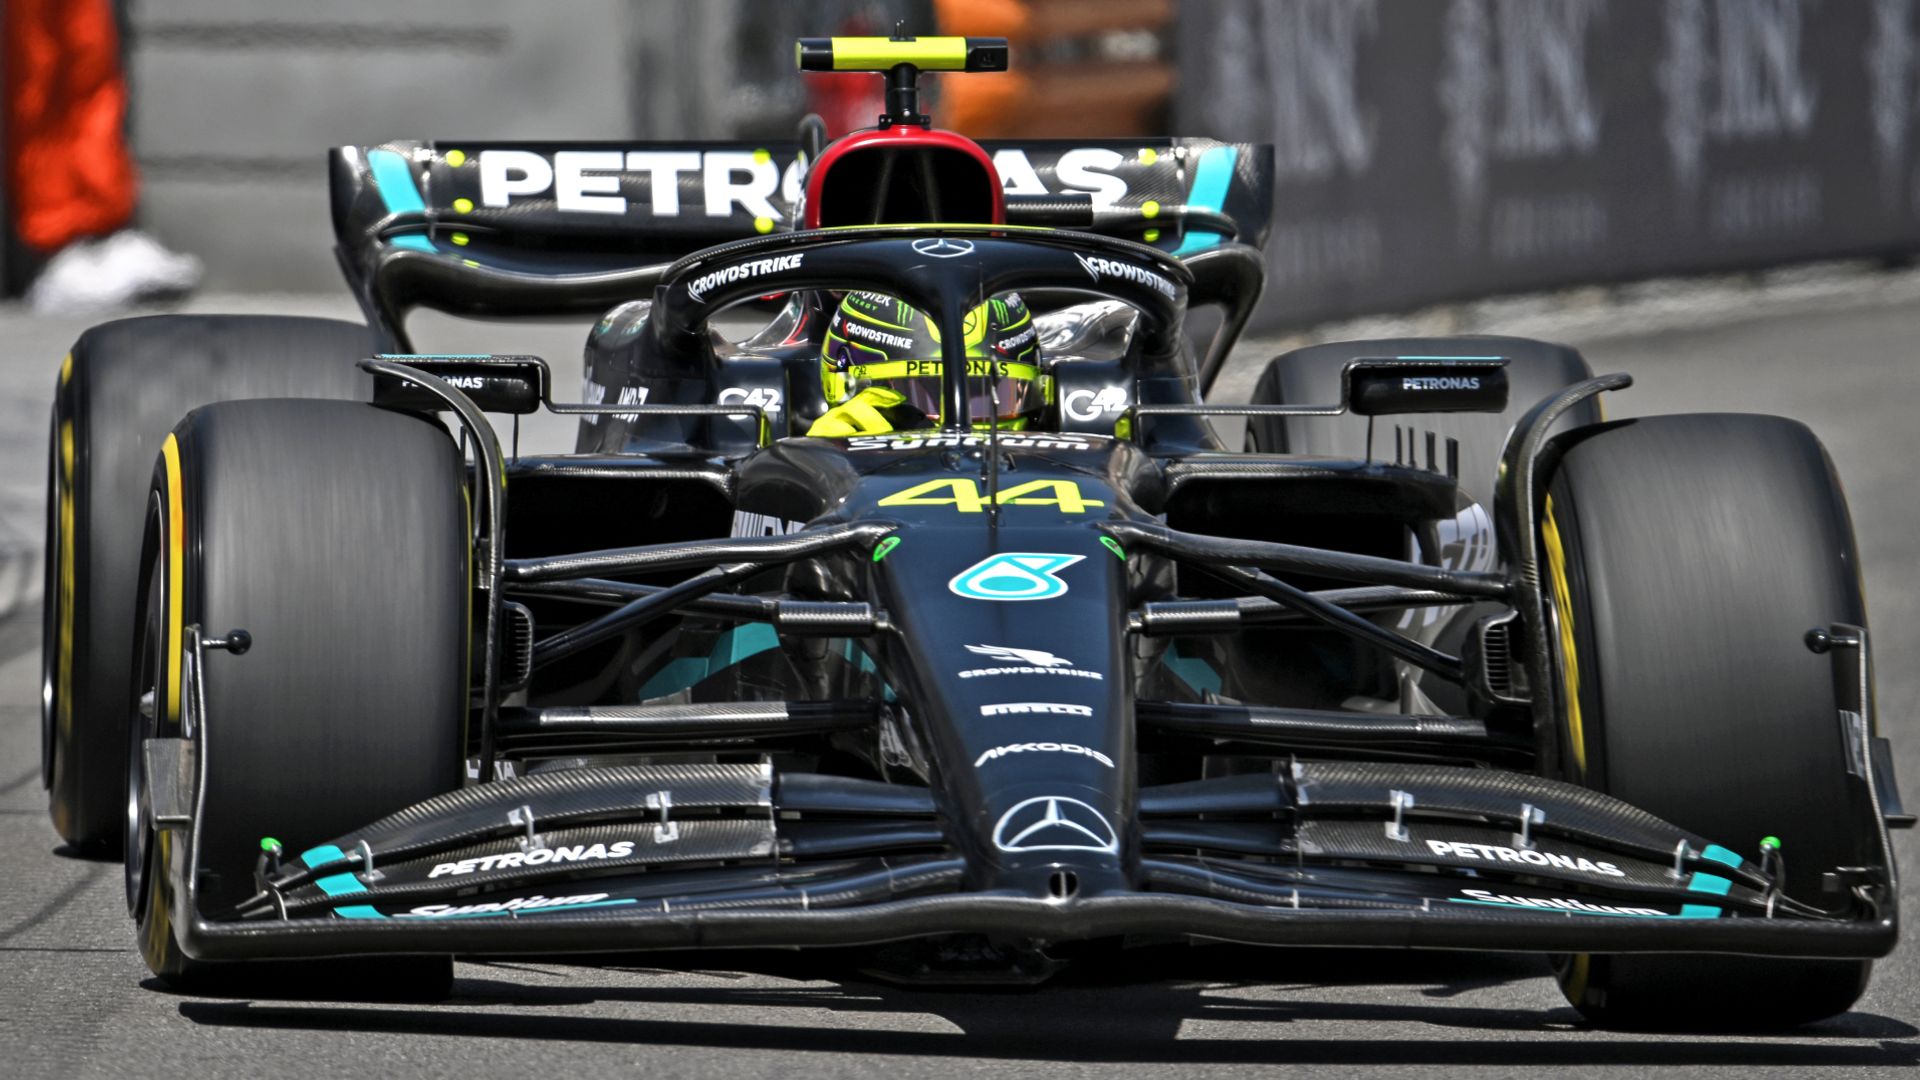 Hamilton: 'Shame' improved Mercedes not closer to front